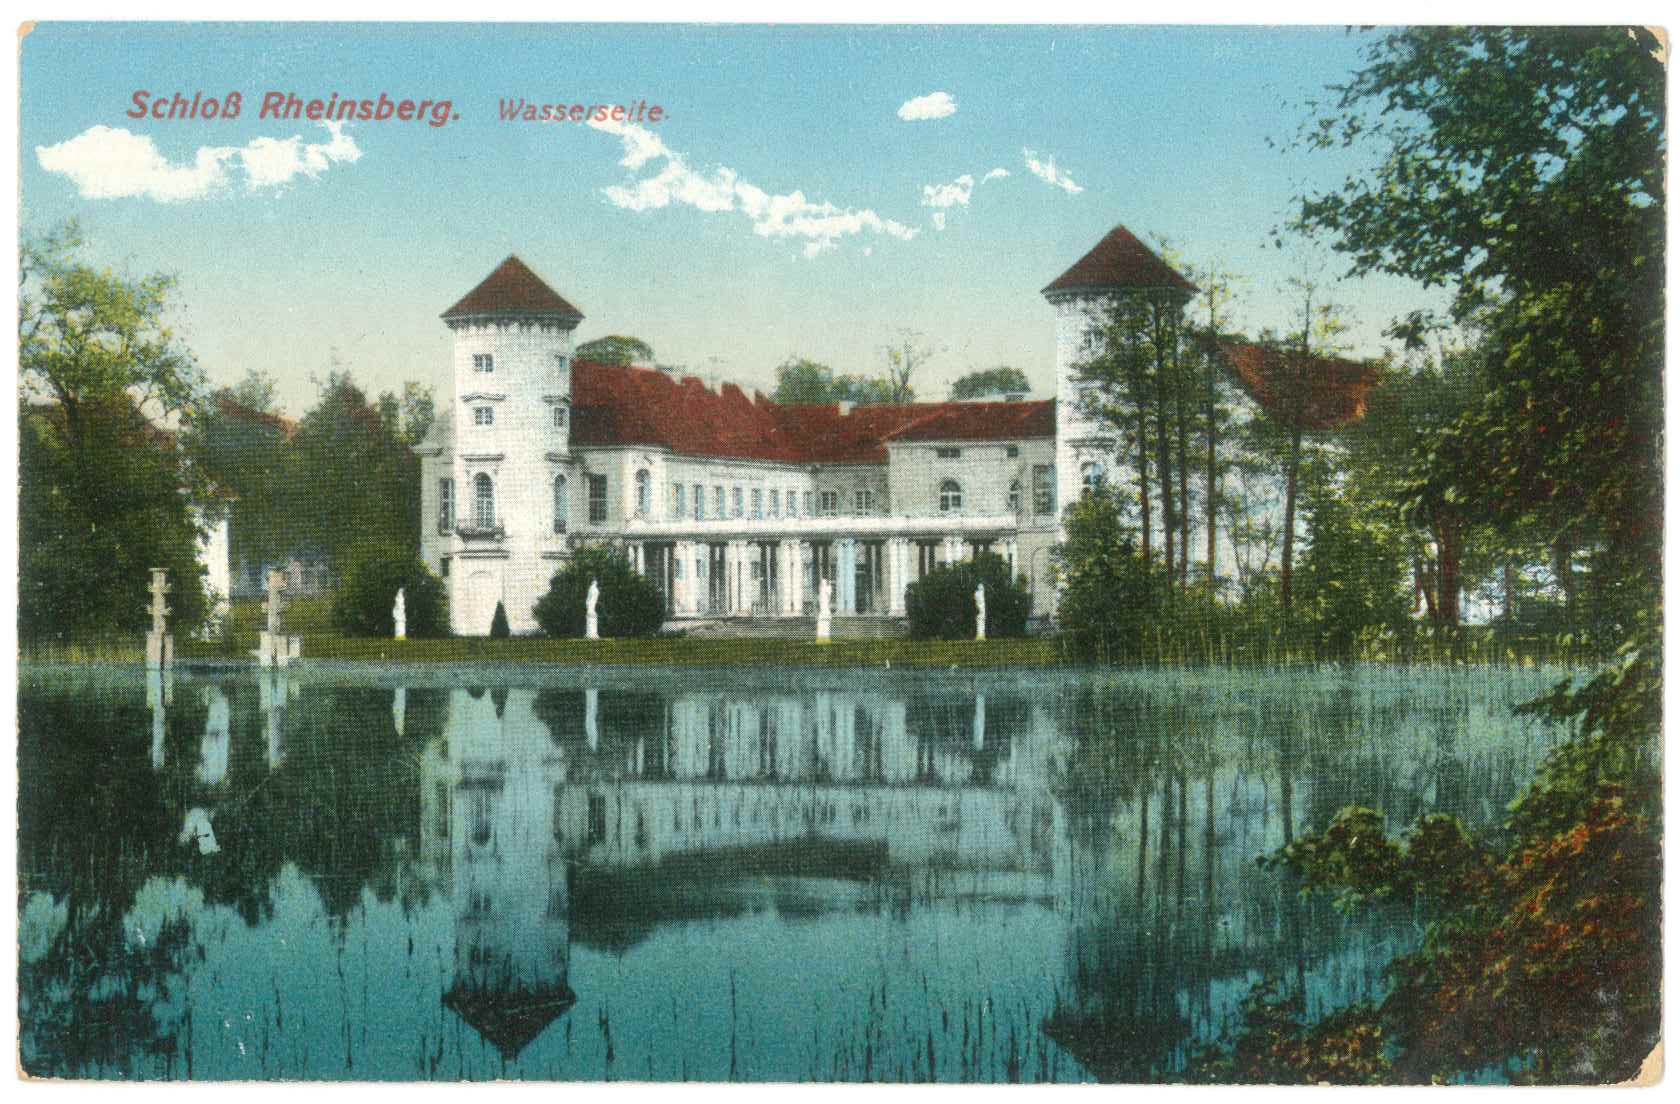 Schloß Rheinsberg, Wasserseite (Kurt Tucholsky Literaturmuseum CC BY-NC-SA)